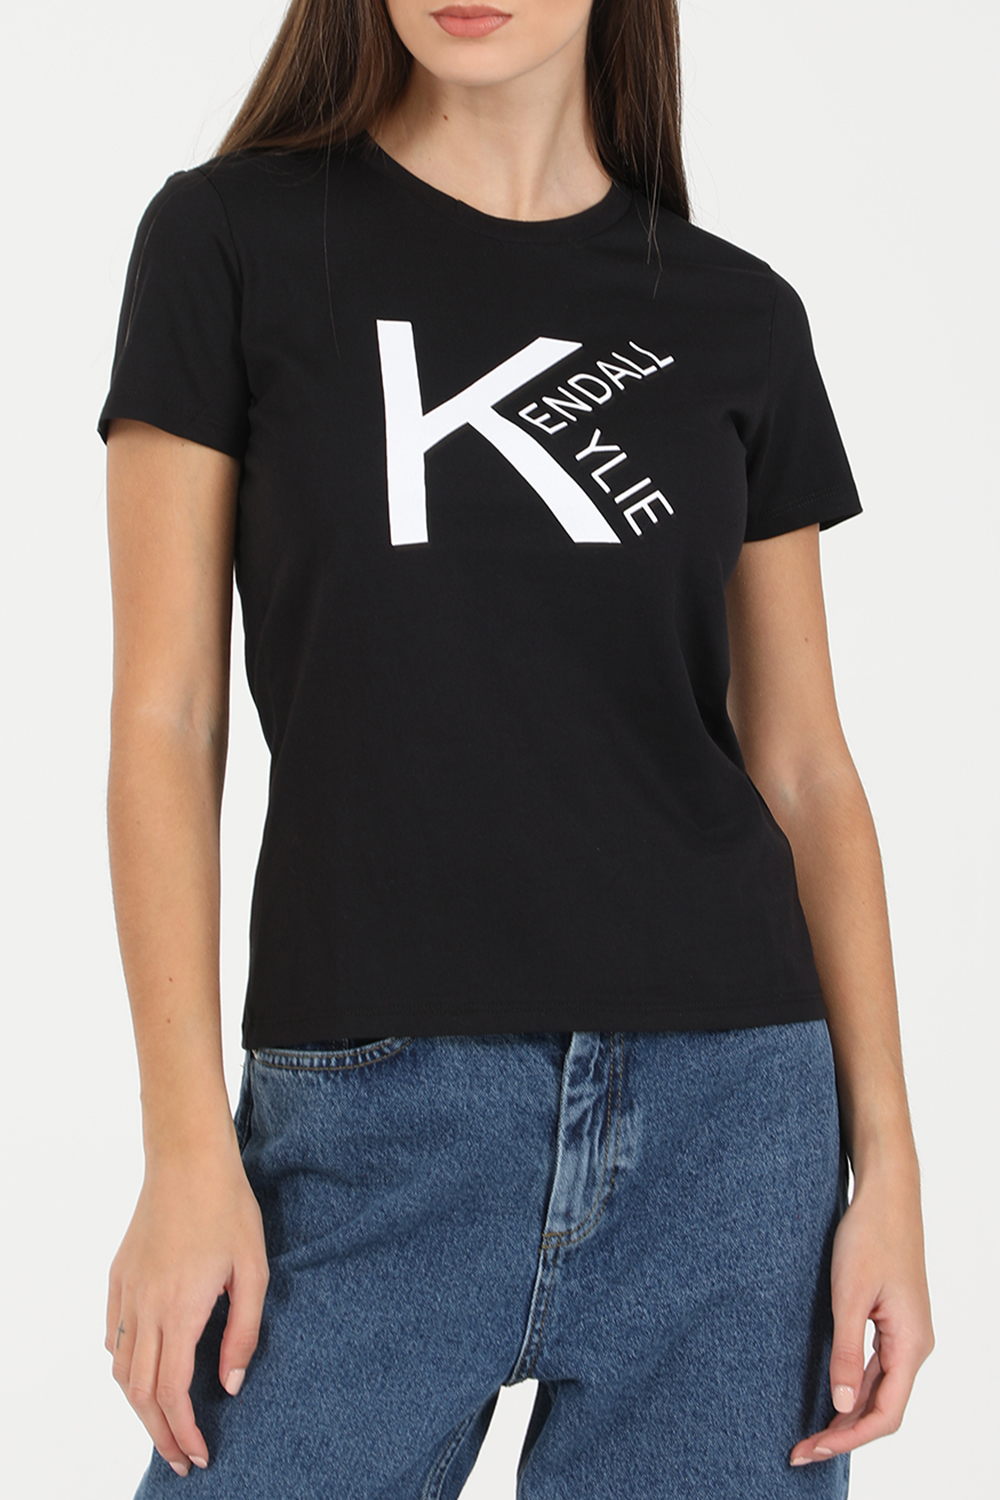 KENDALL + KYLIE – Γυναικειο t-shirt KENDALL + KYLIE ACTIVE LOGO V4 μαυρο